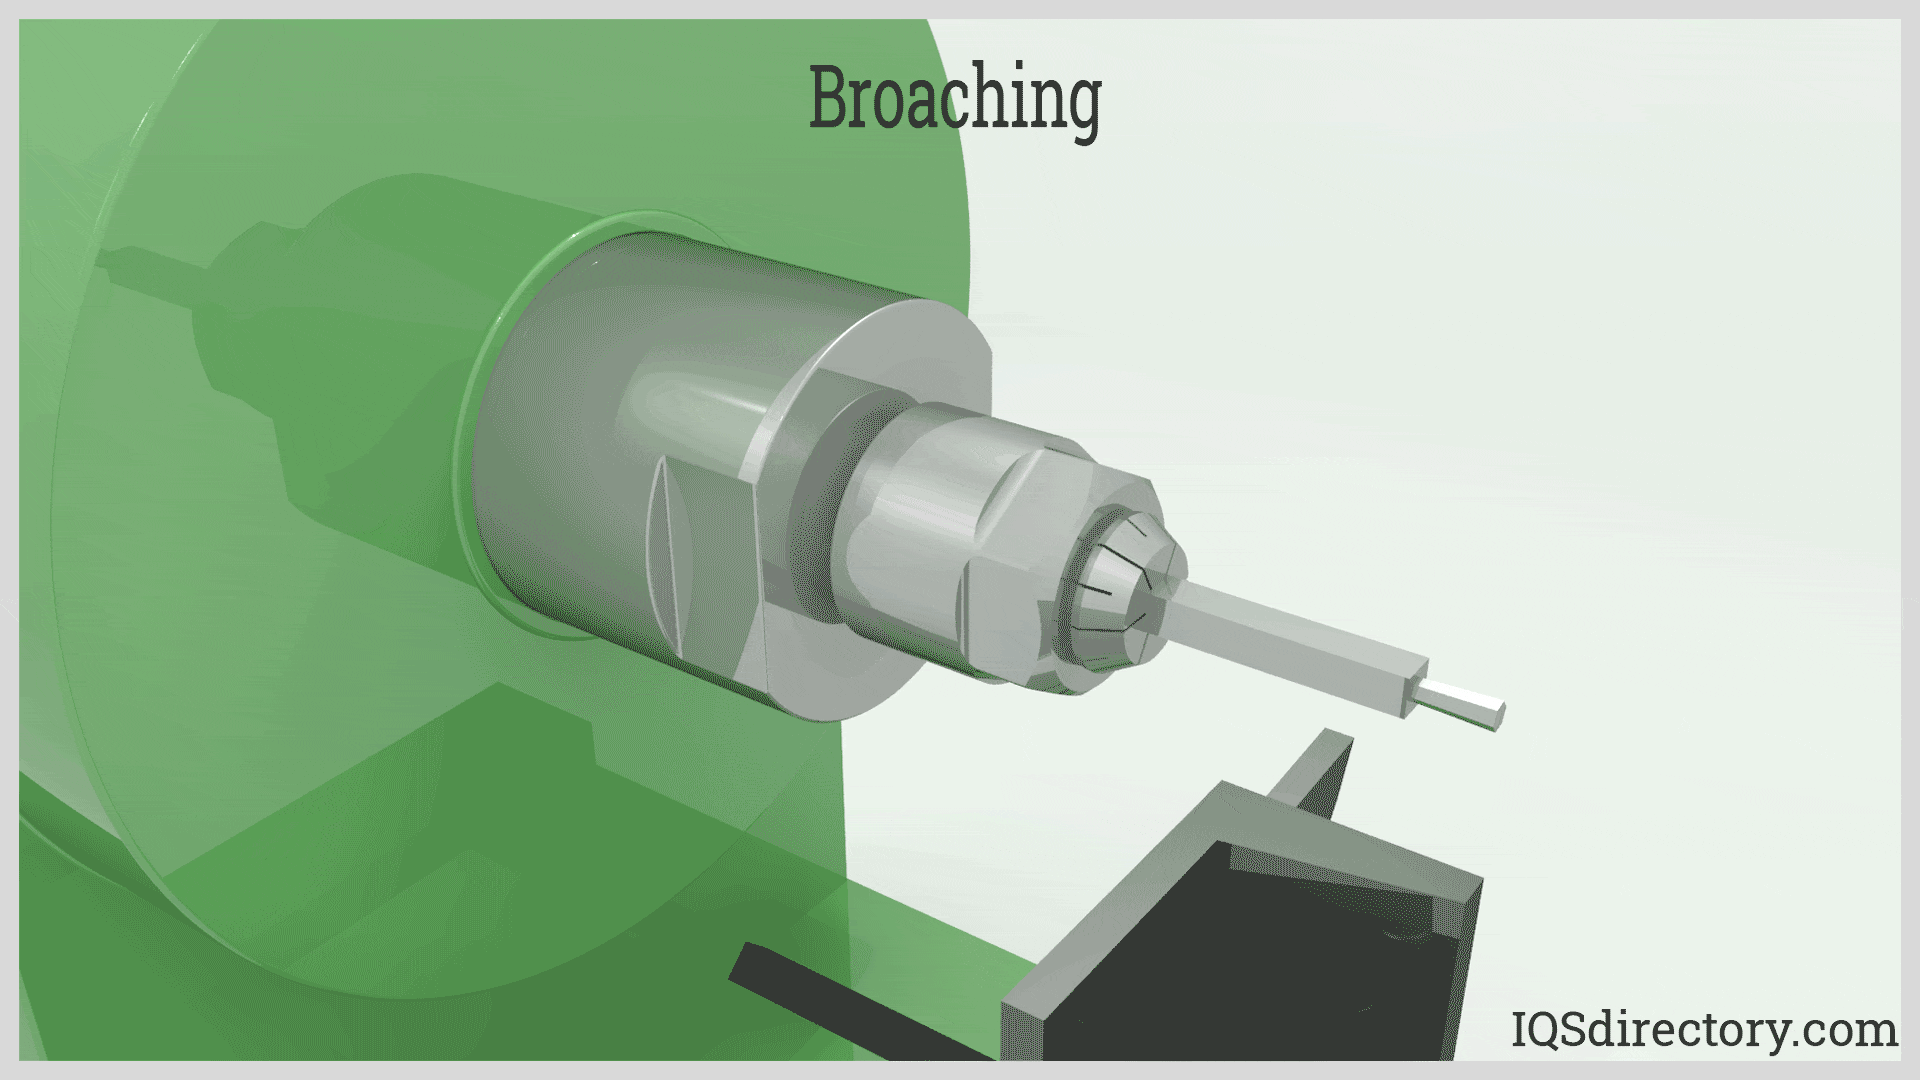 Broach Cutter Holder Insert, Shaper Machine Tools